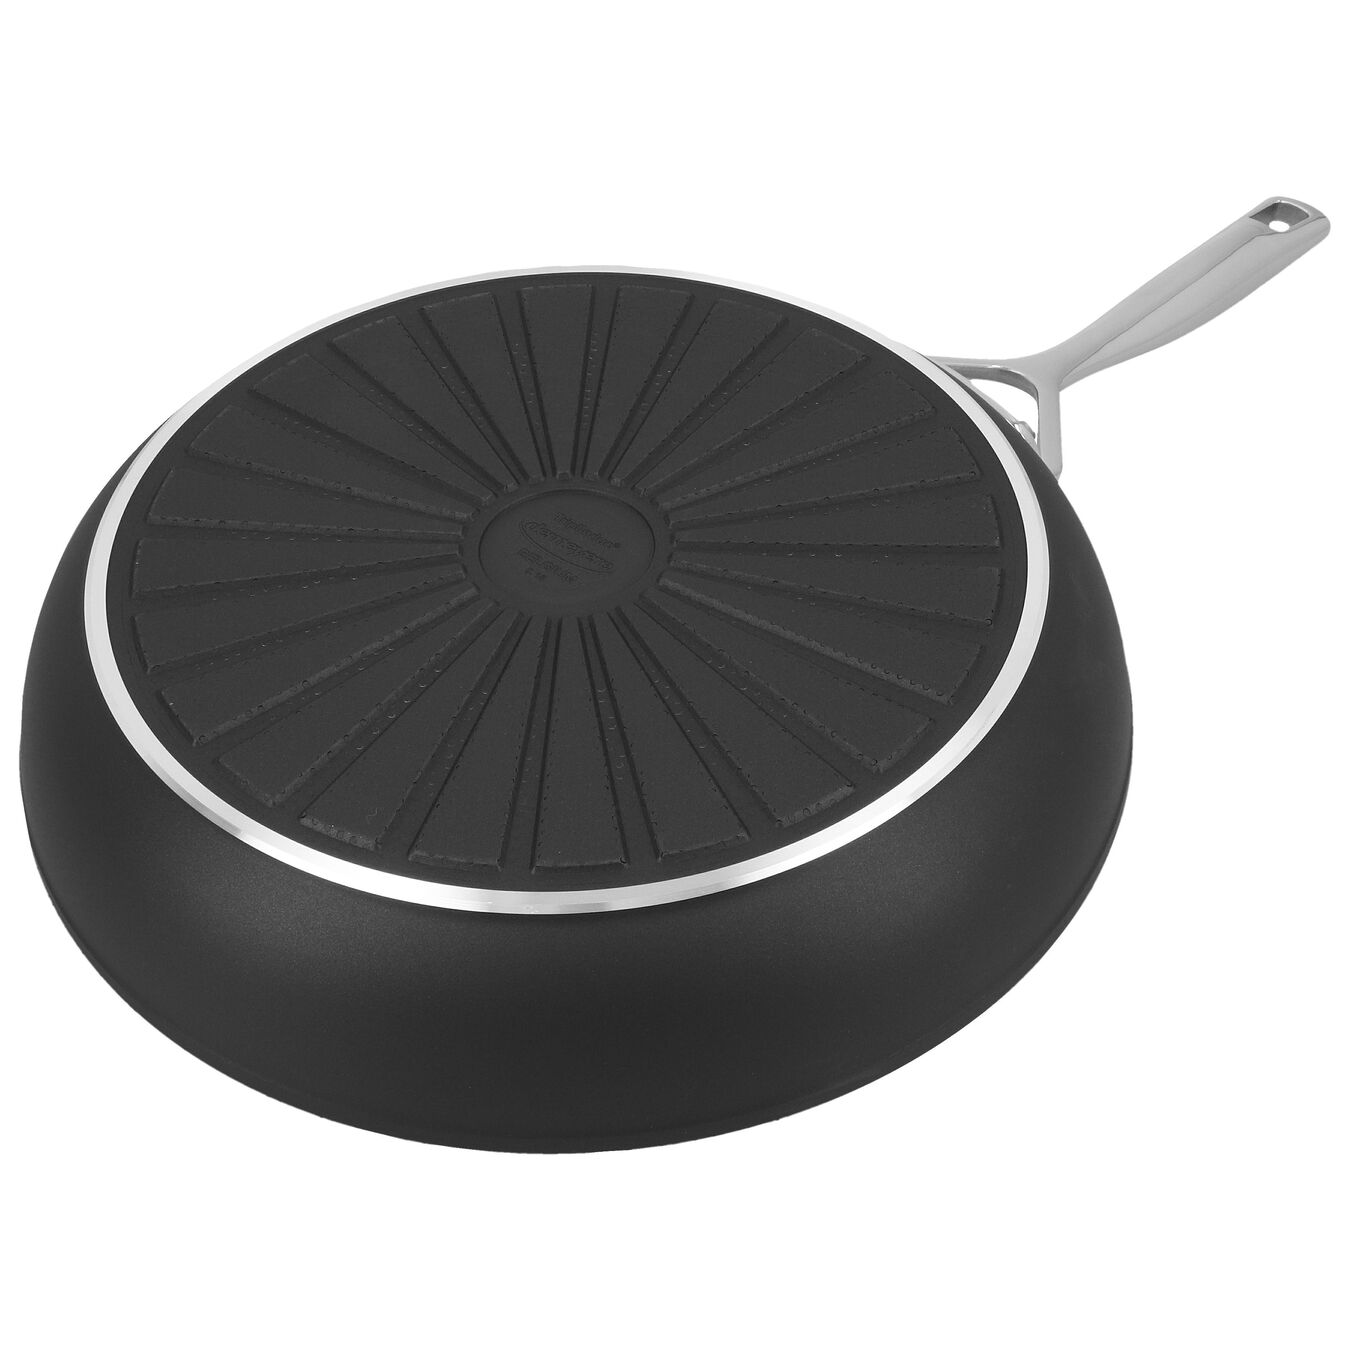 28 cm Aluminum Frying pan silver-black,,large 2